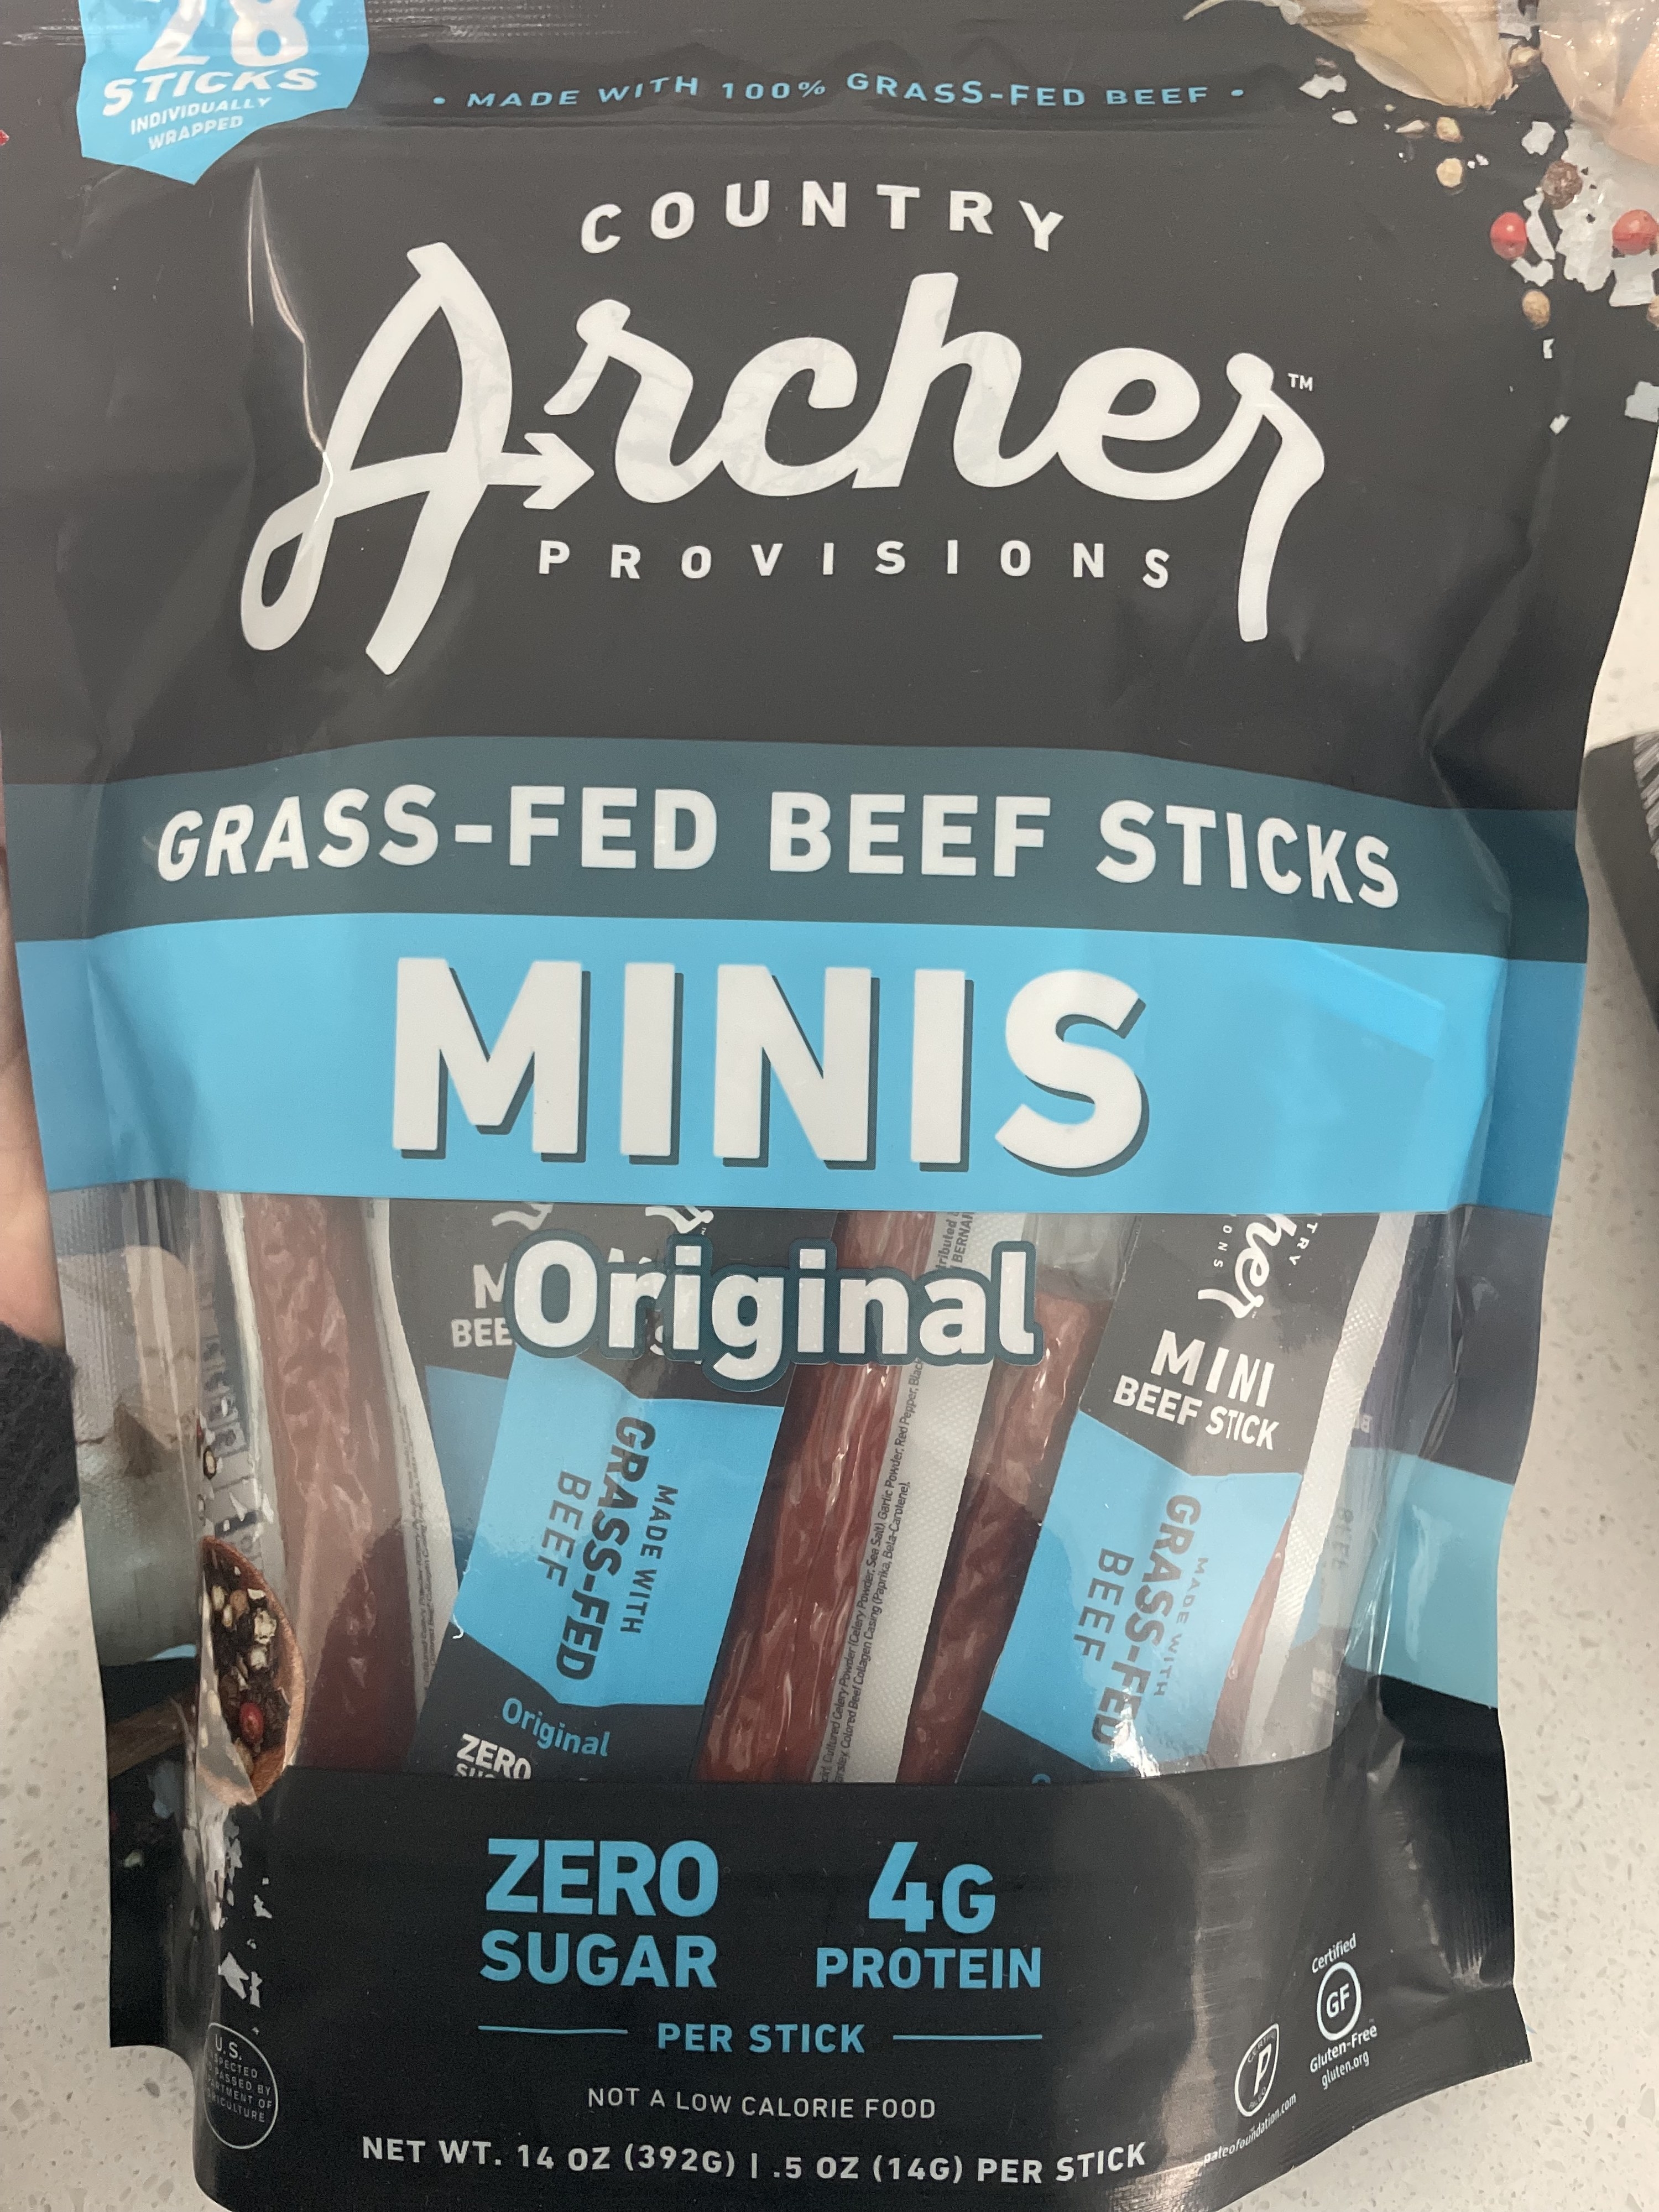 Country Archer Grass-Fed Beef Sticks